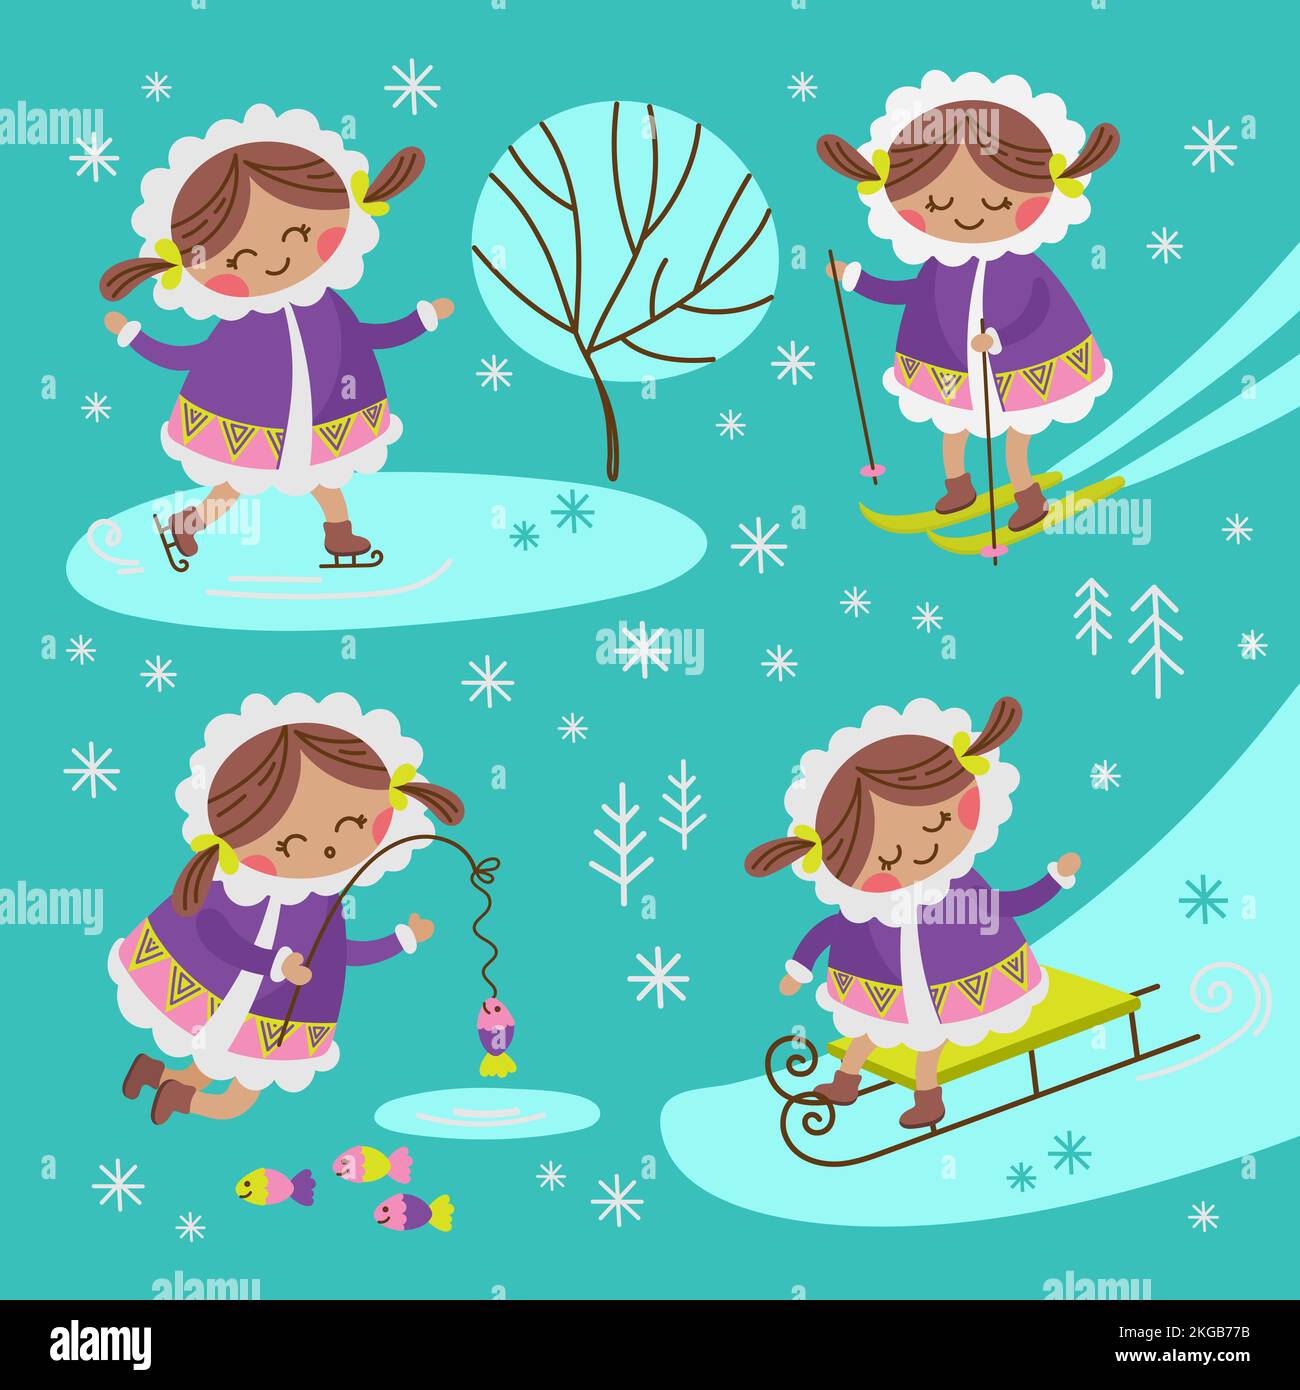 ESKIMO GIRL Alaska Winter Child personnages Comic Funny Flat Design dessin main dessin vectoriel Illustration Set pour l'impression Illustration de Vecteur